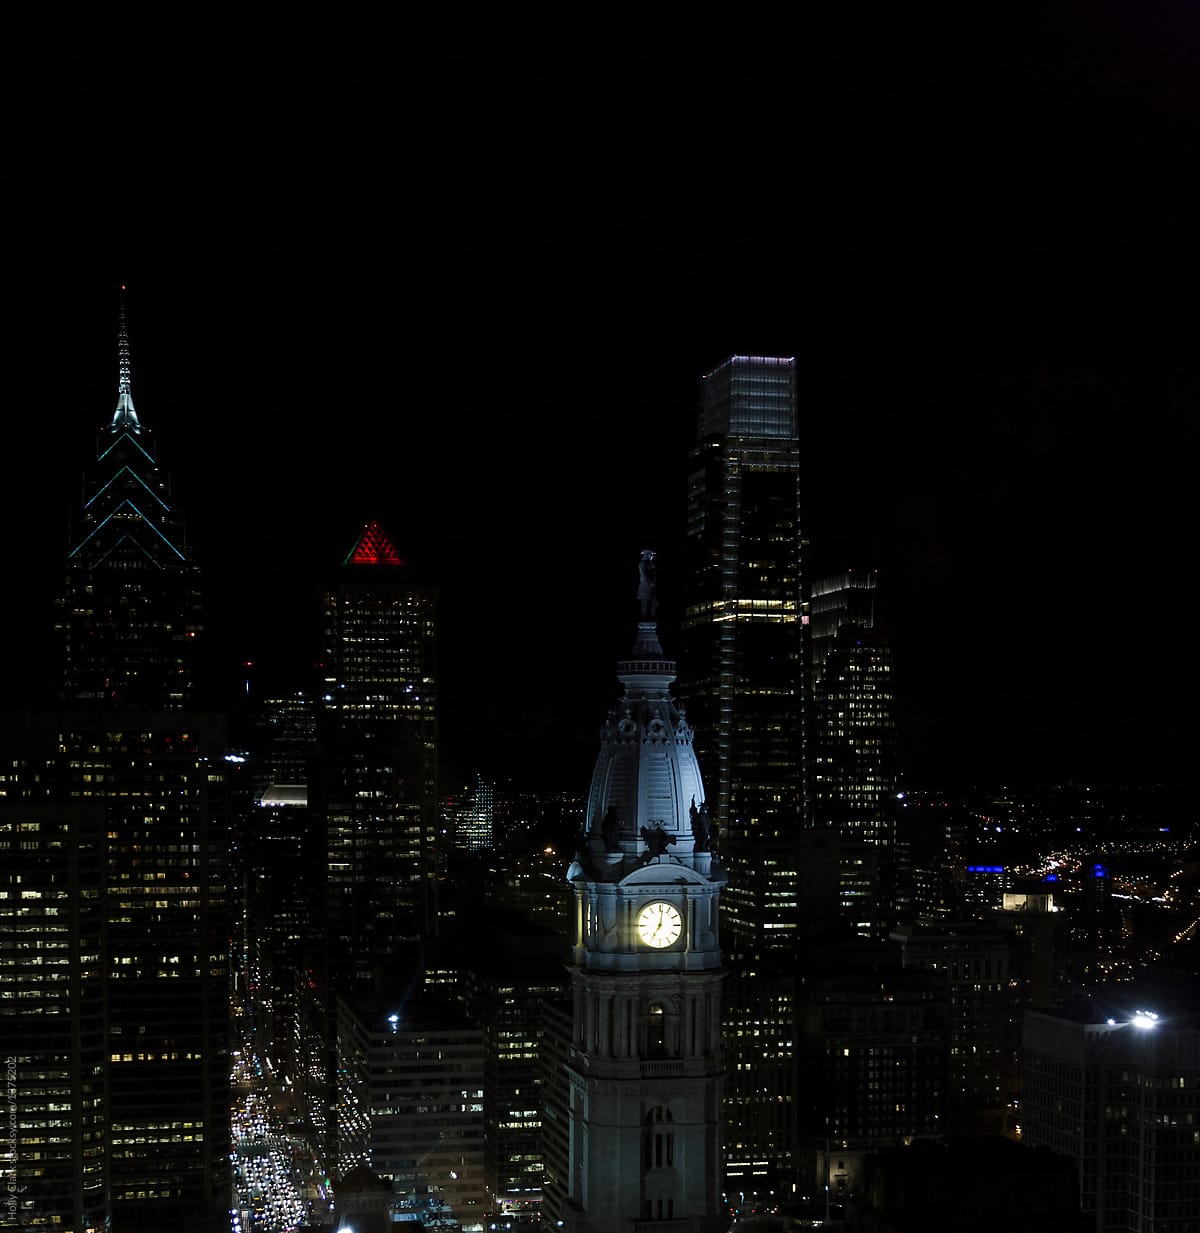 Night View of Philadelphia City Hall against a dark sky